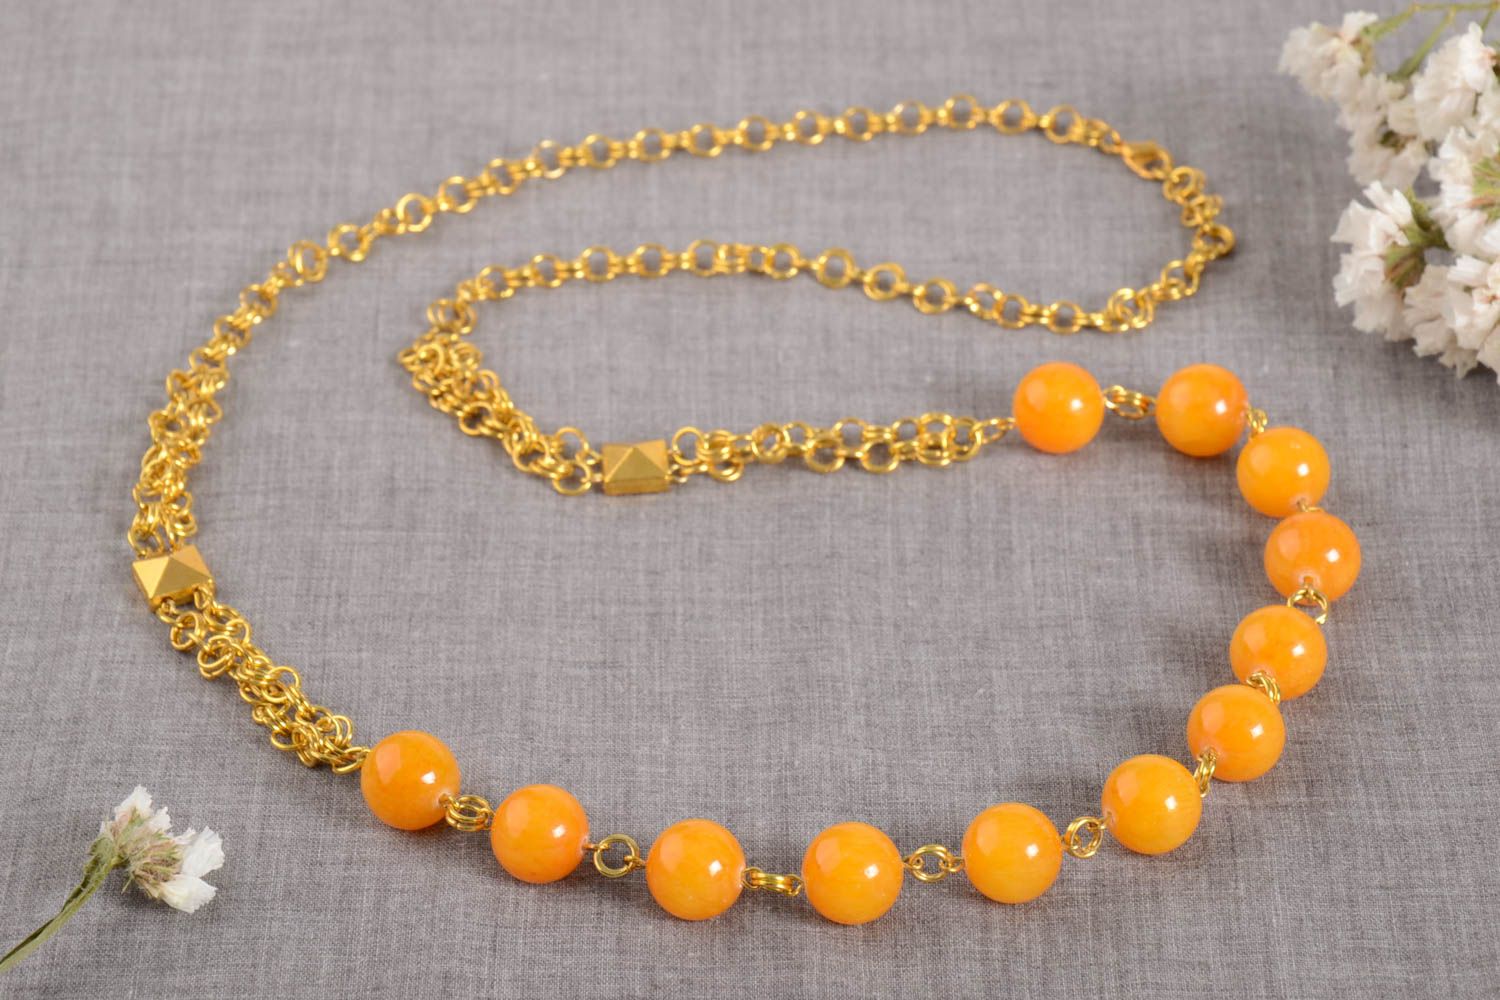 Handmade beaded necklace gemstone bead necklace beautiful jewellery gift ideas photo 1